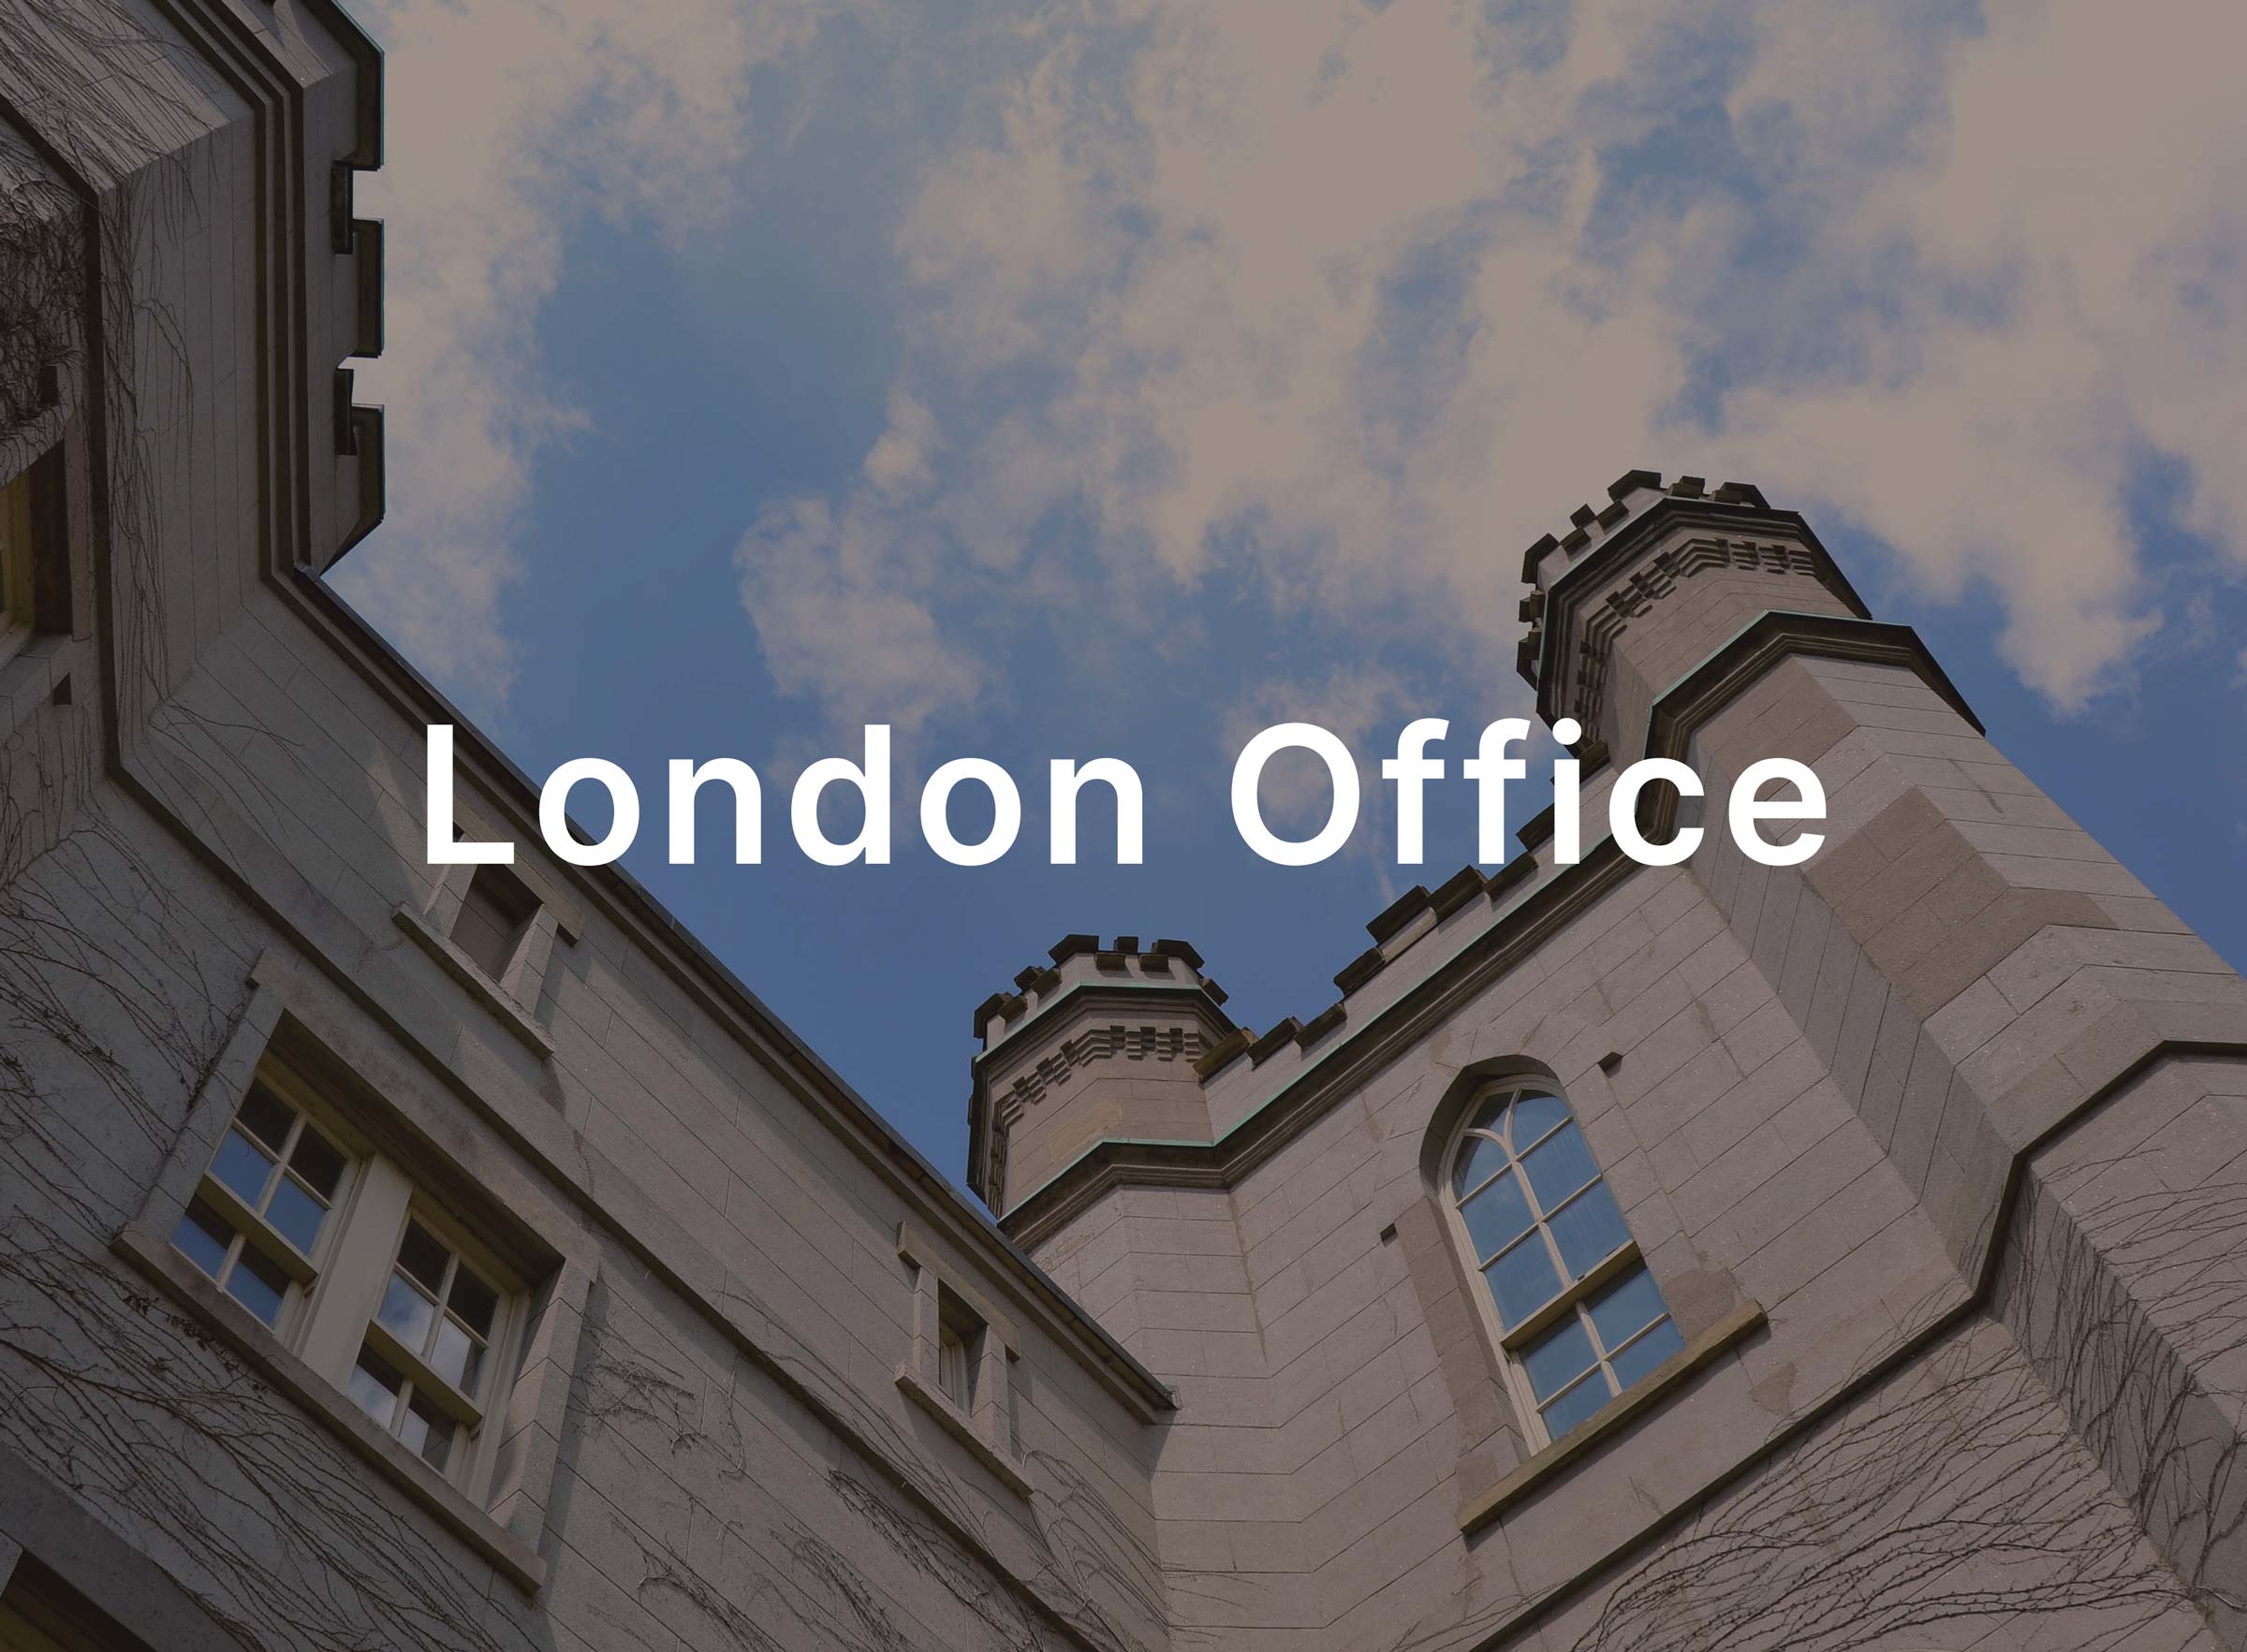 London Ontario Caanda Office and Contact